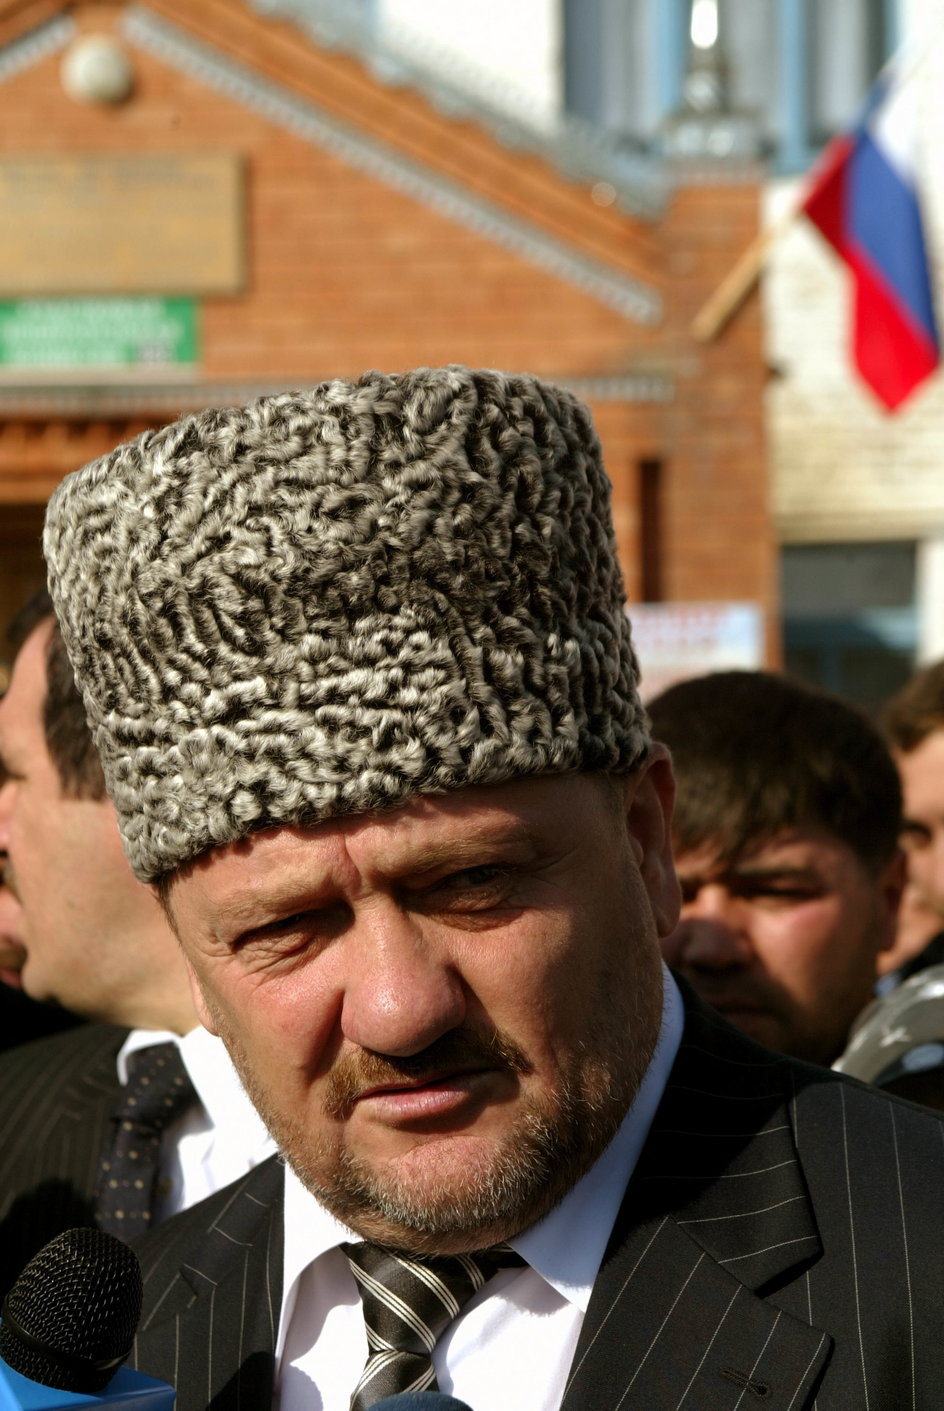 Achmat Kadyrow